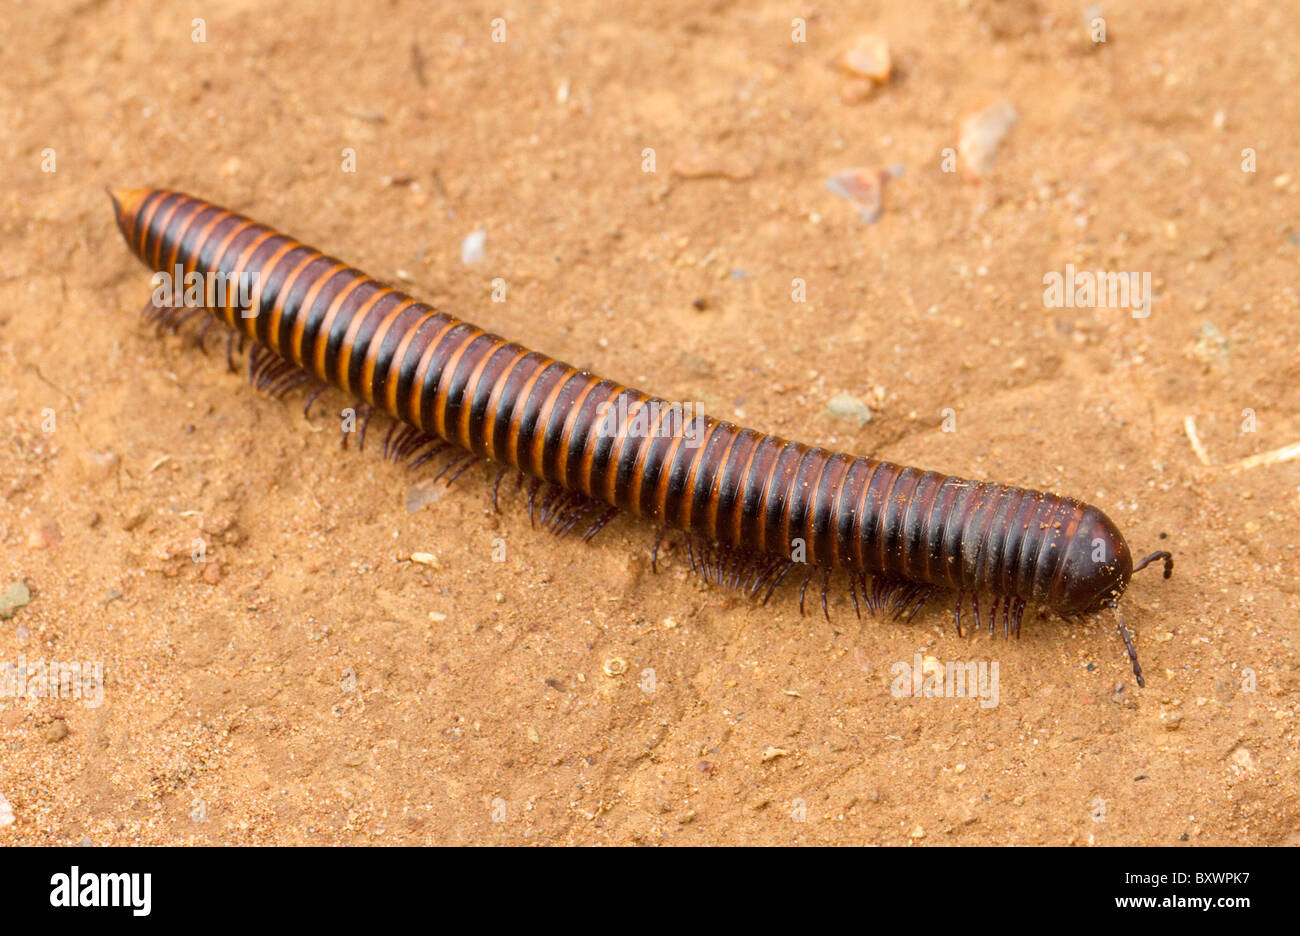 African giant millipede (Archispirostreptidus gigas) Stock Photo